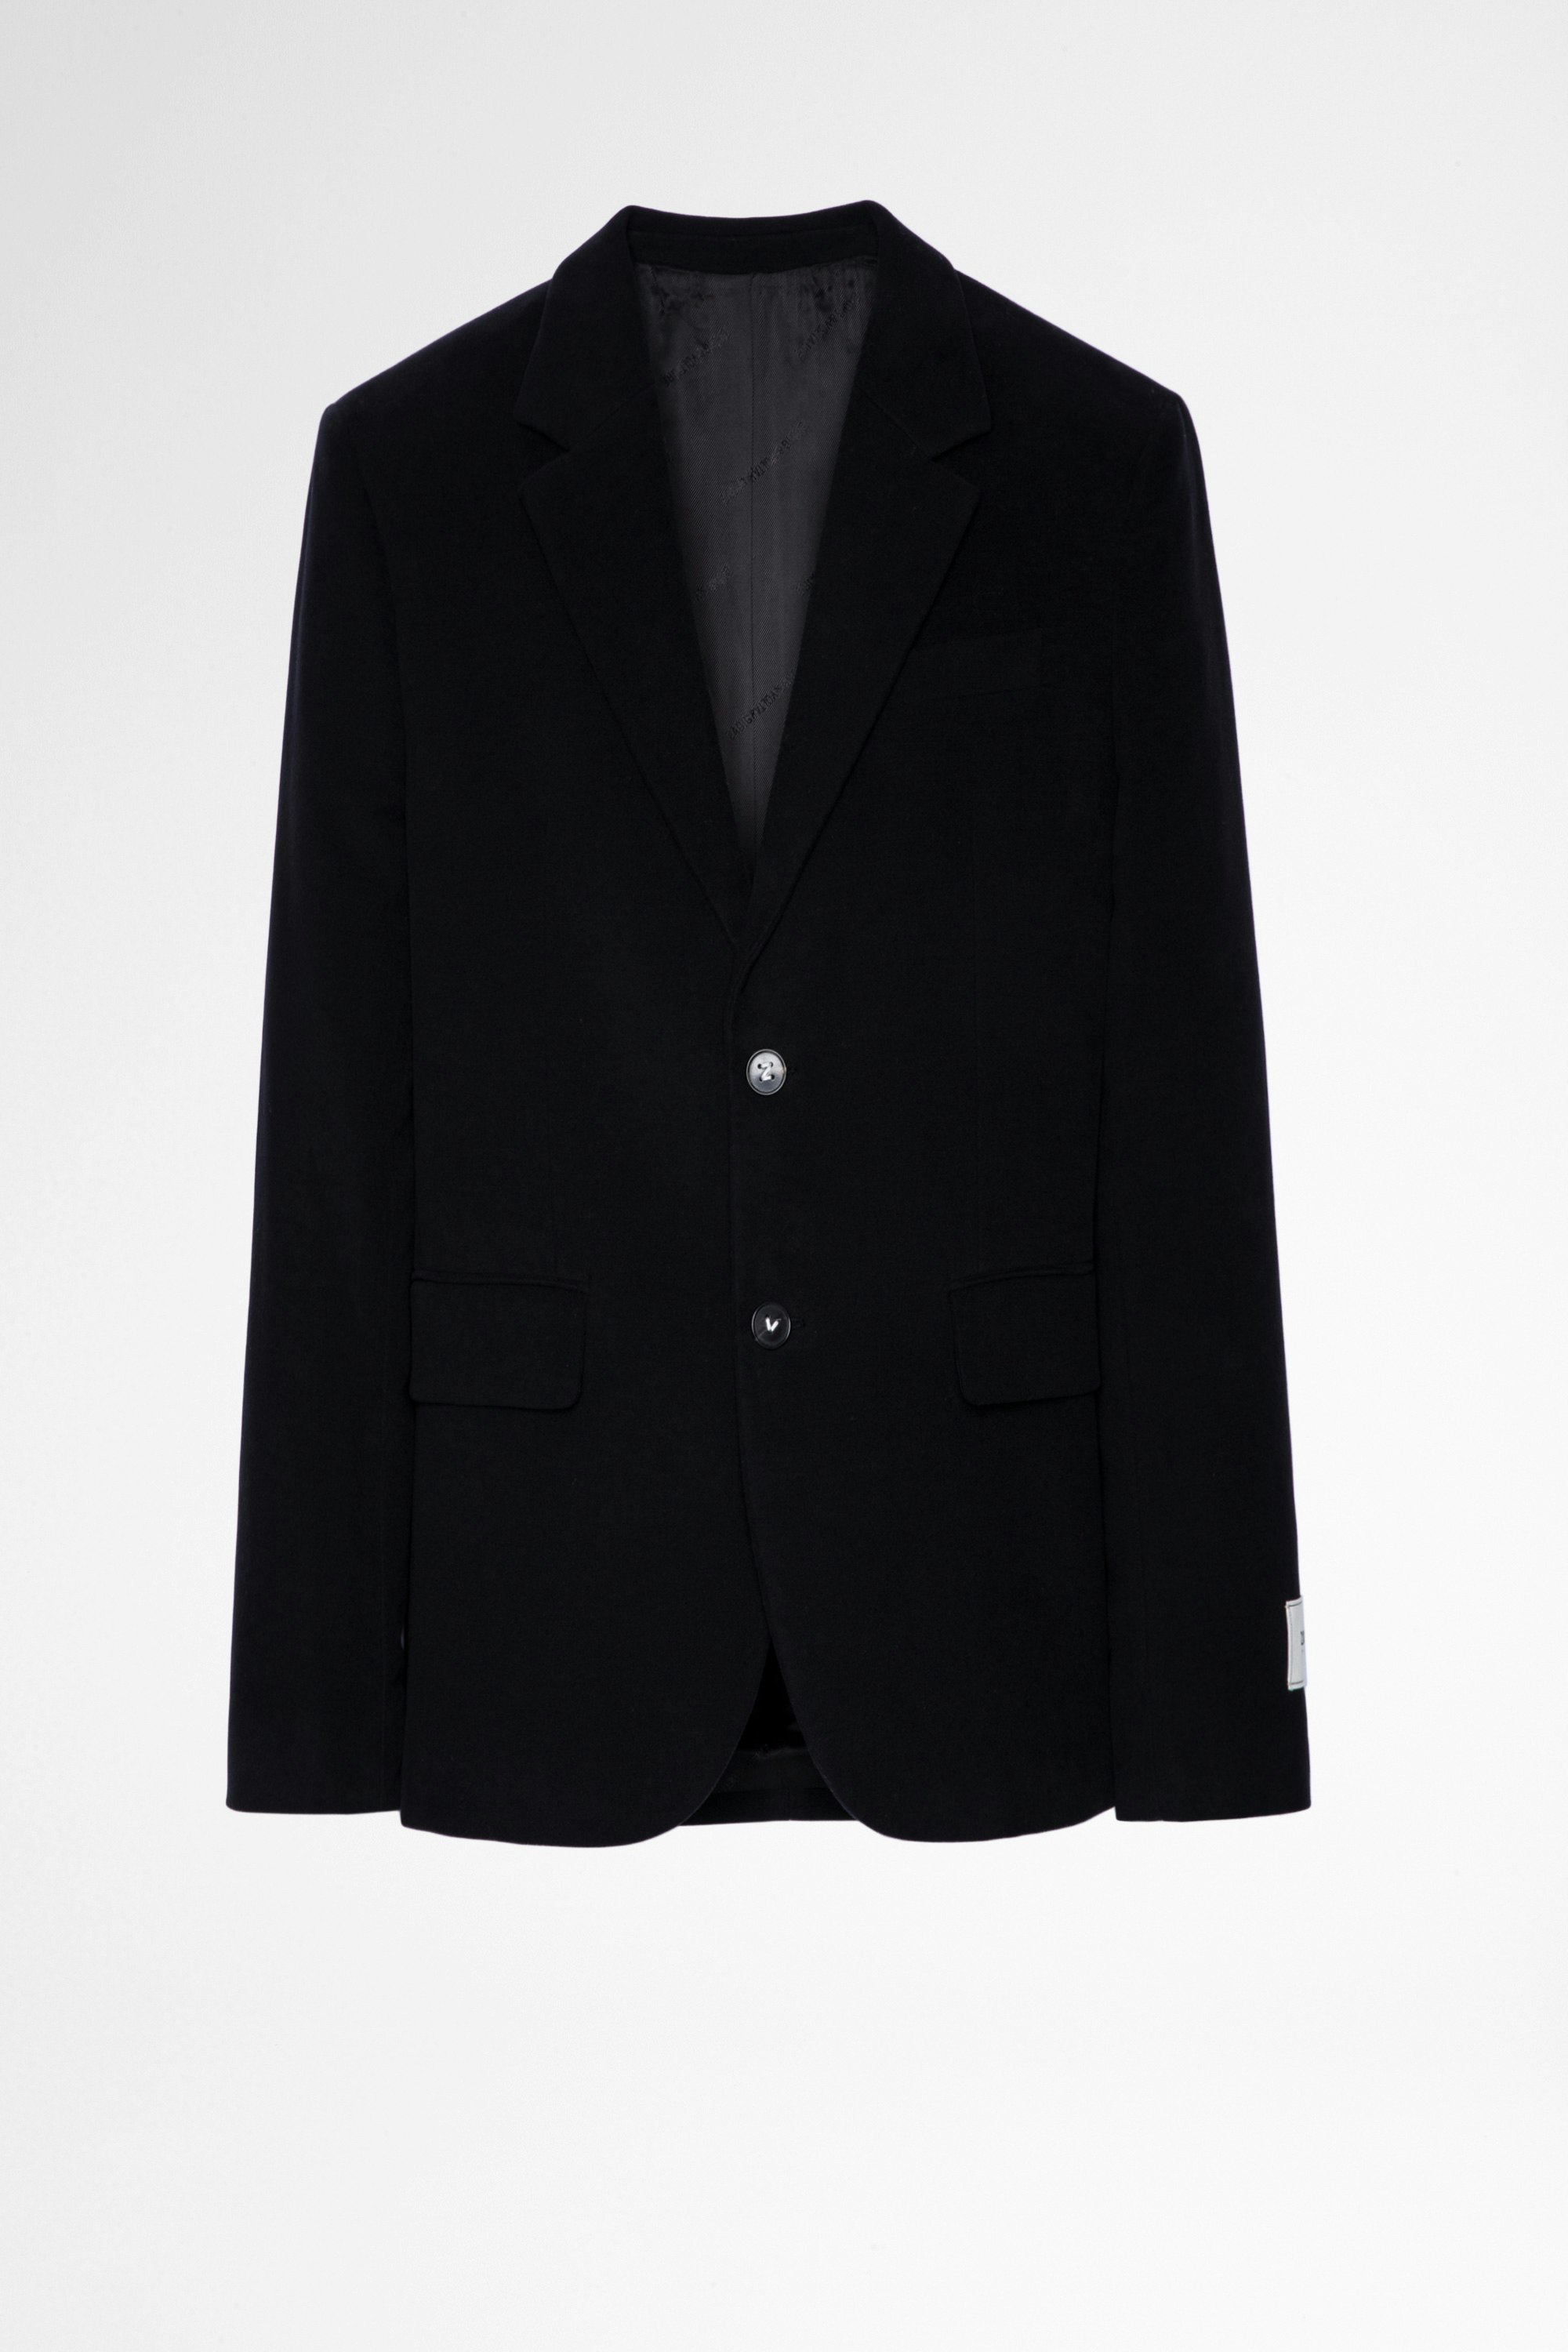 Viks Moleskine Jacket Men's black cotton jacket